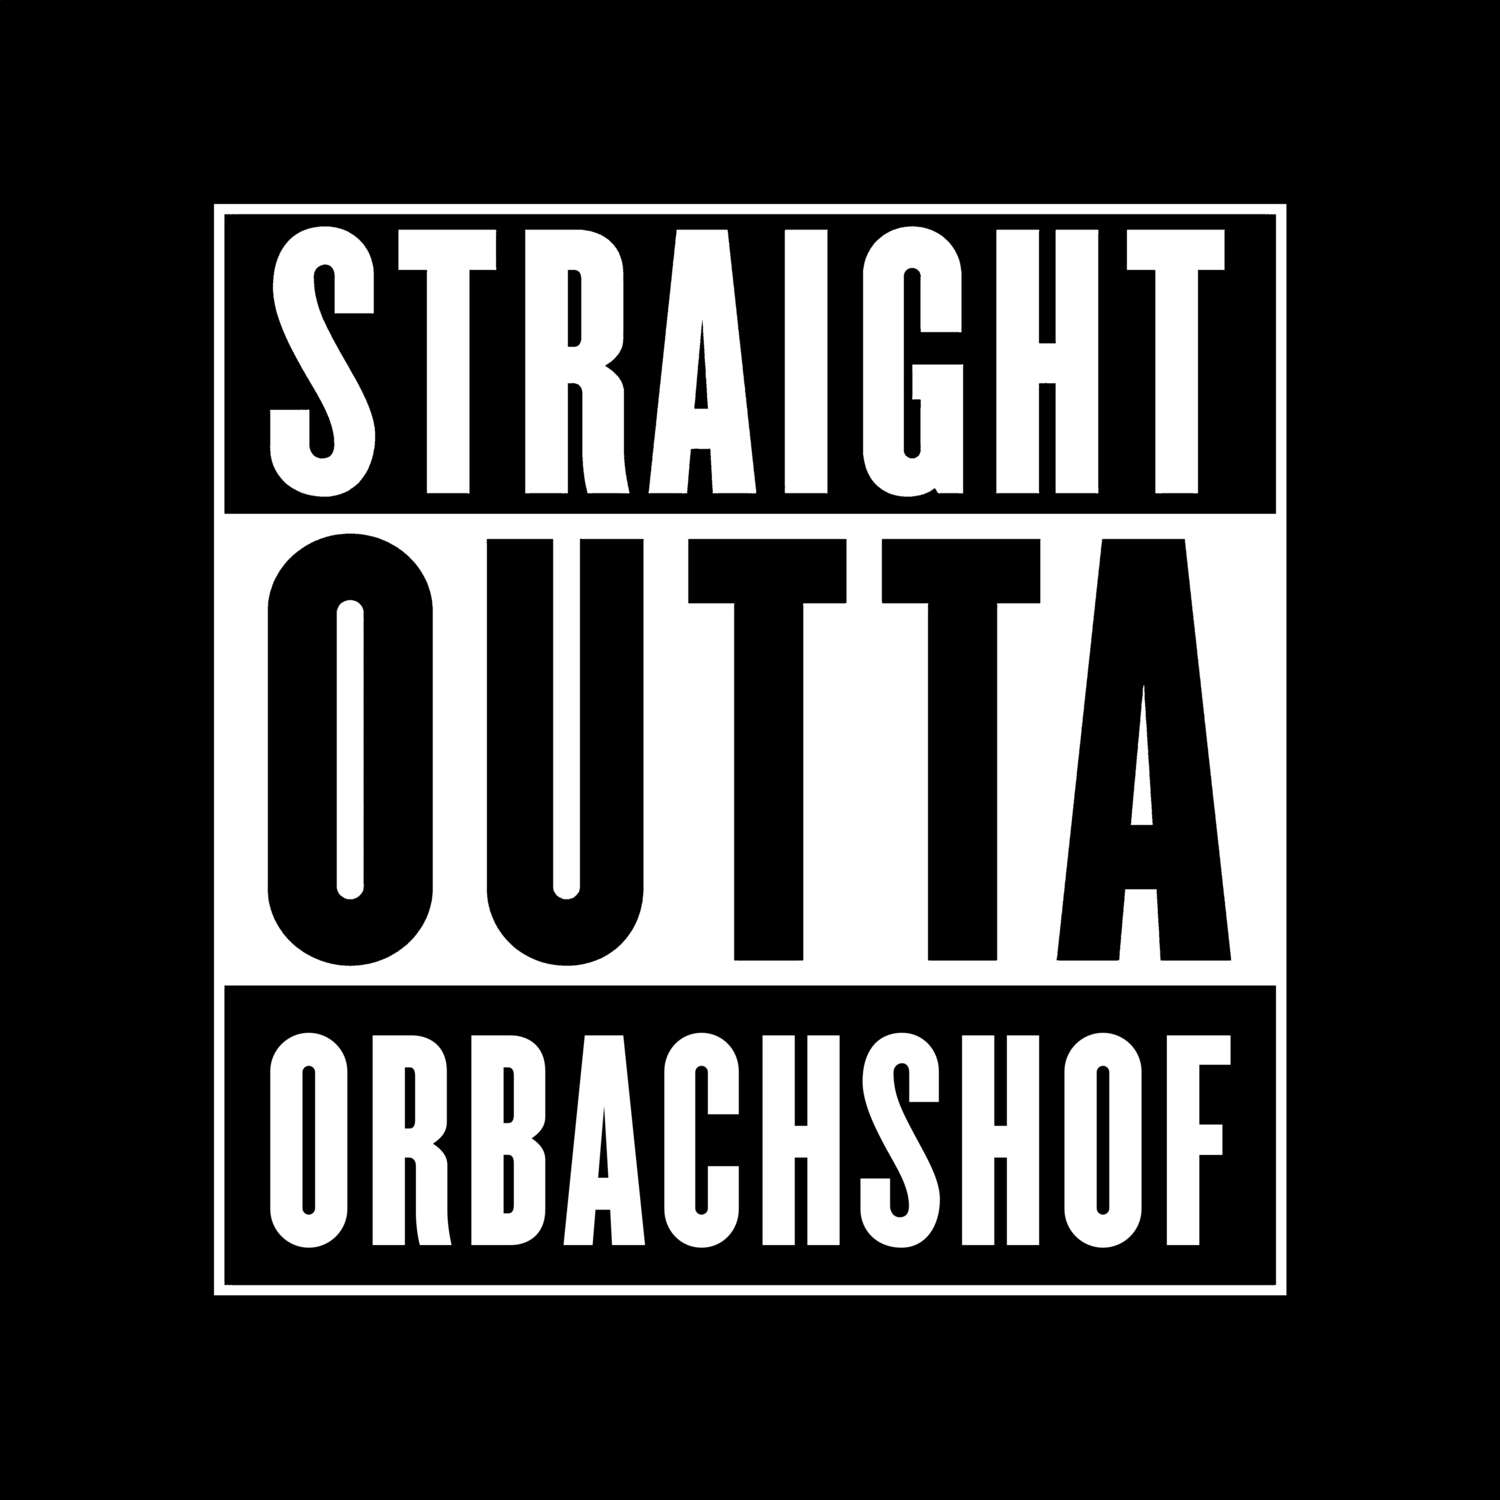 Orbachshof T-Shirt »Straight Outta«